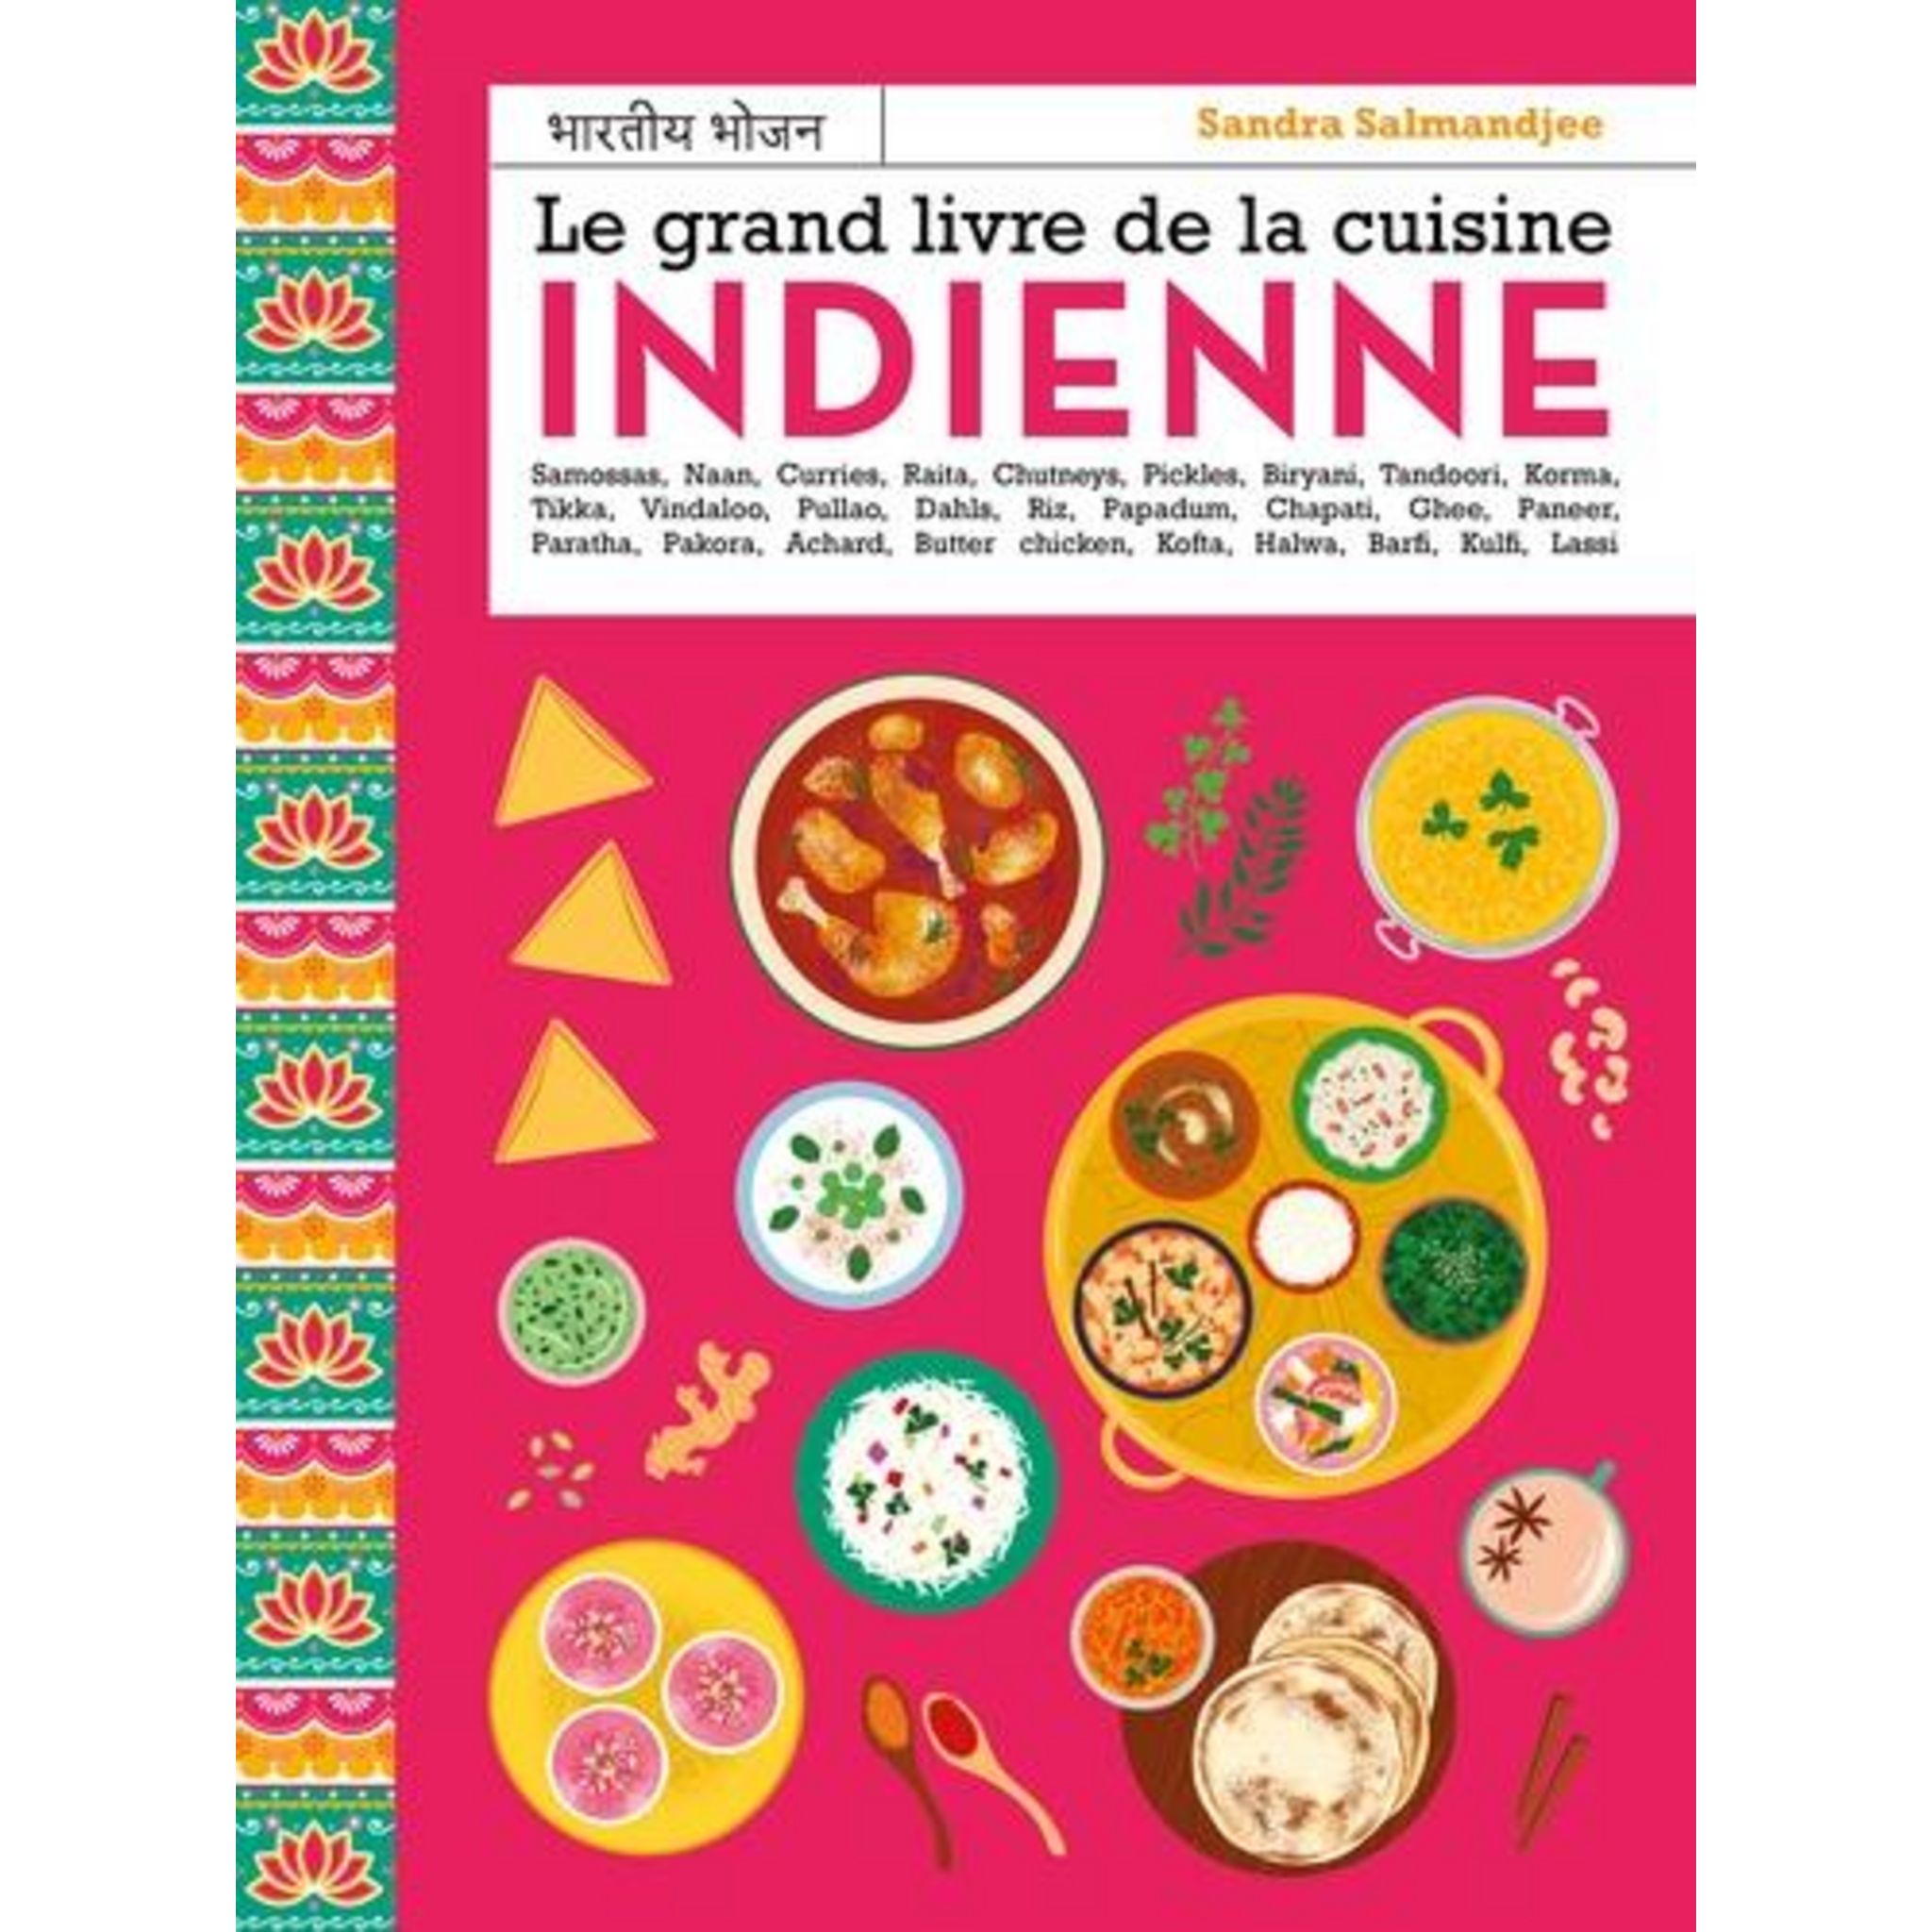 Le grand livre de la cuisine marocaine